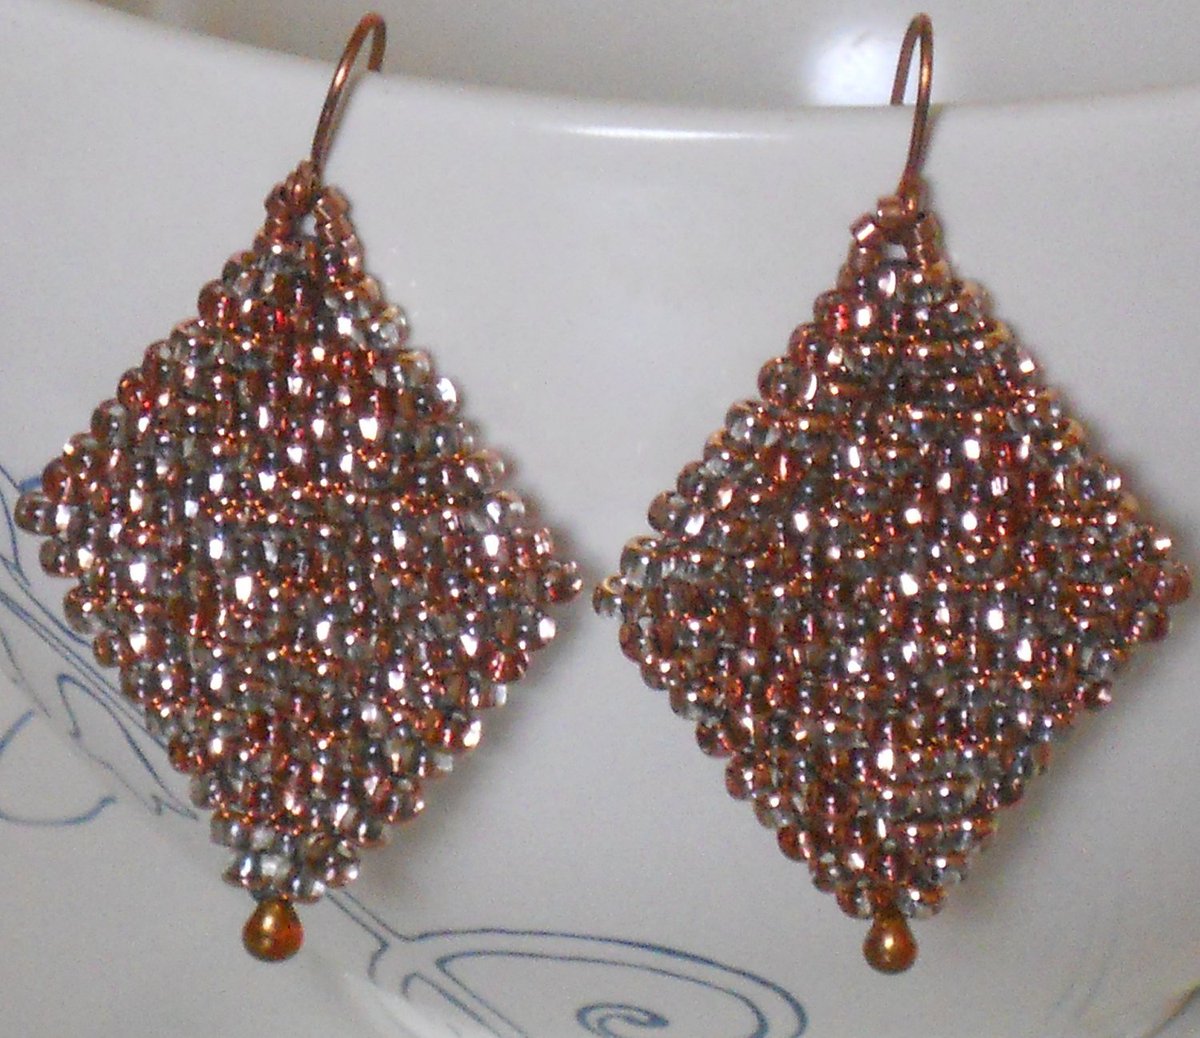 Bronze Dangle Earrings, Beaded Earrings, Diamond Shaped… tuppu.net/ee717982 #FeithHodgeCreations #CasualEarring